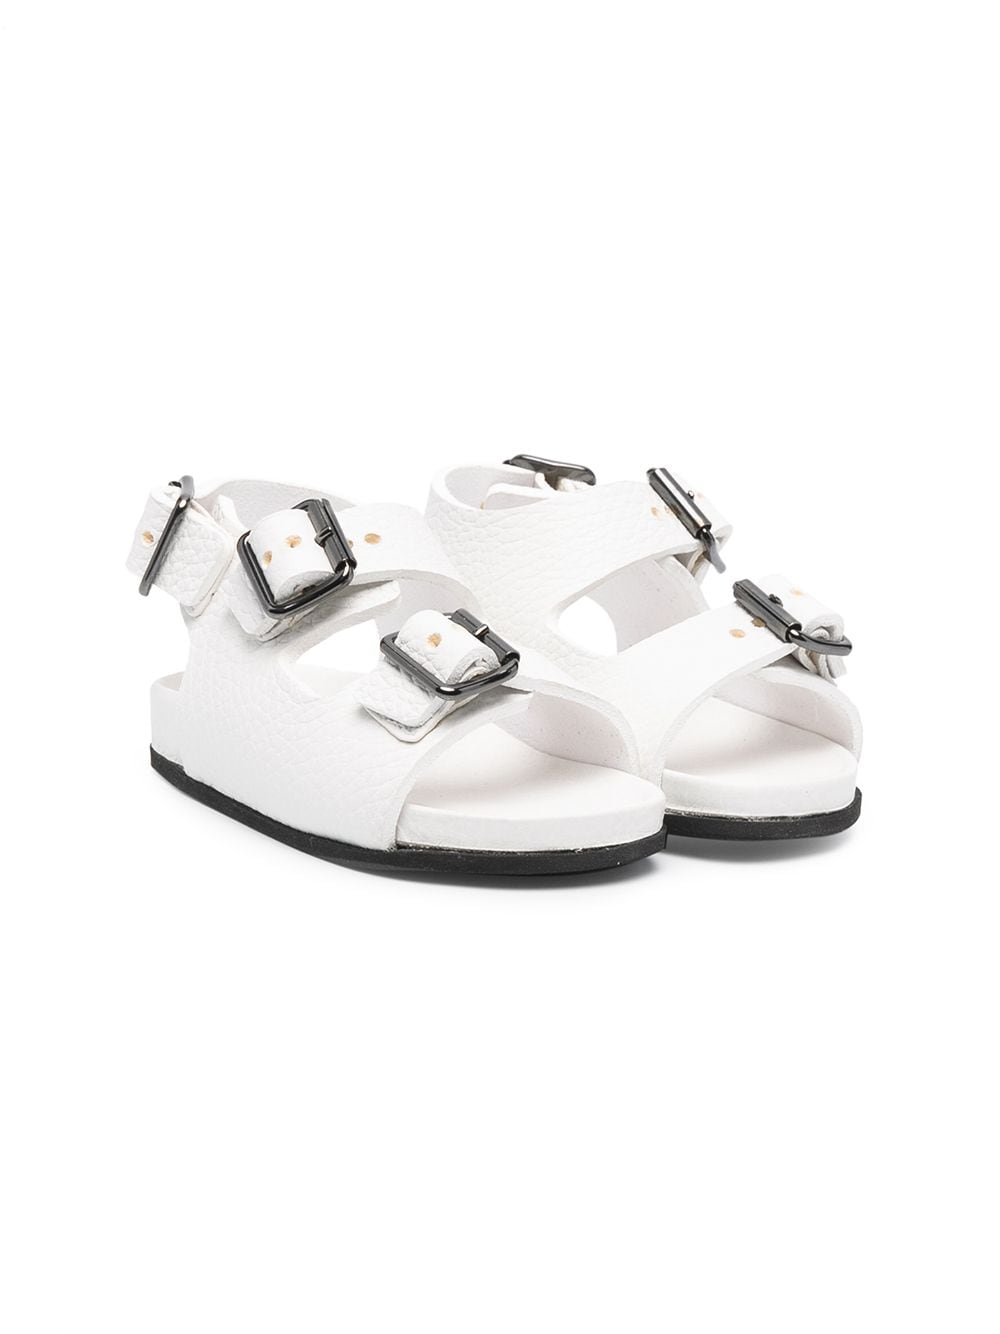 Gallucci Kids' Leather Buckle-strap Sandals In White